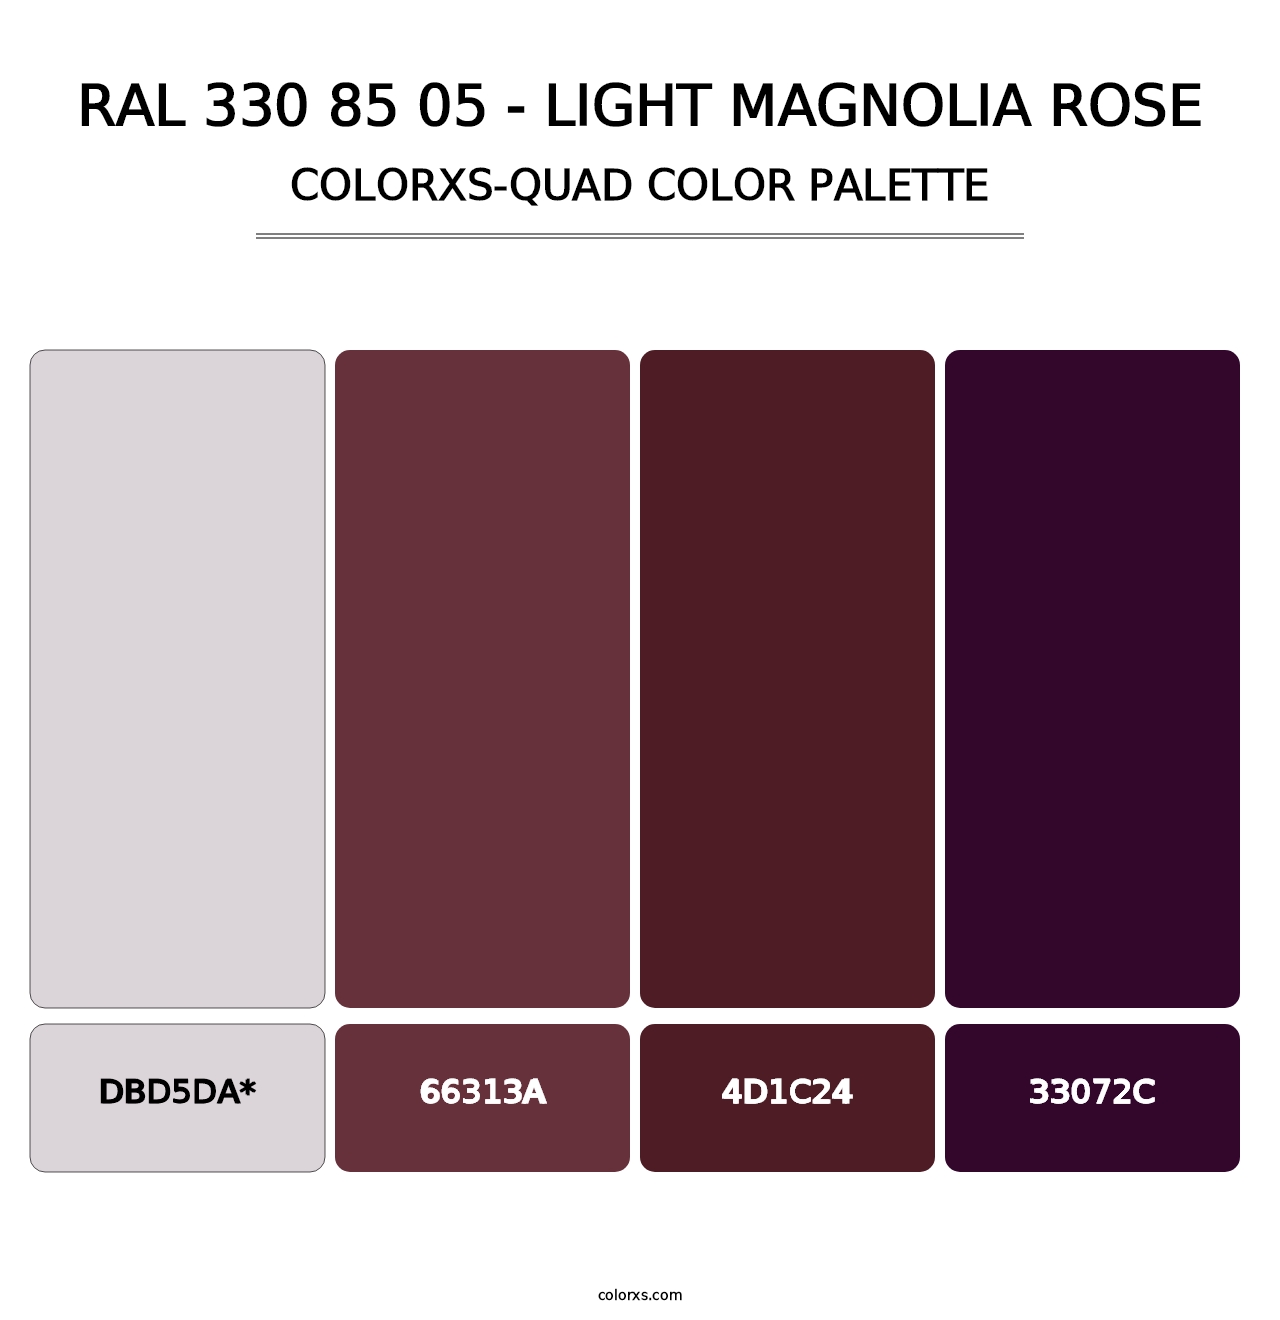 RAL 330 85 05 - Light Magnolia Rose - Colorxs Quad Palette